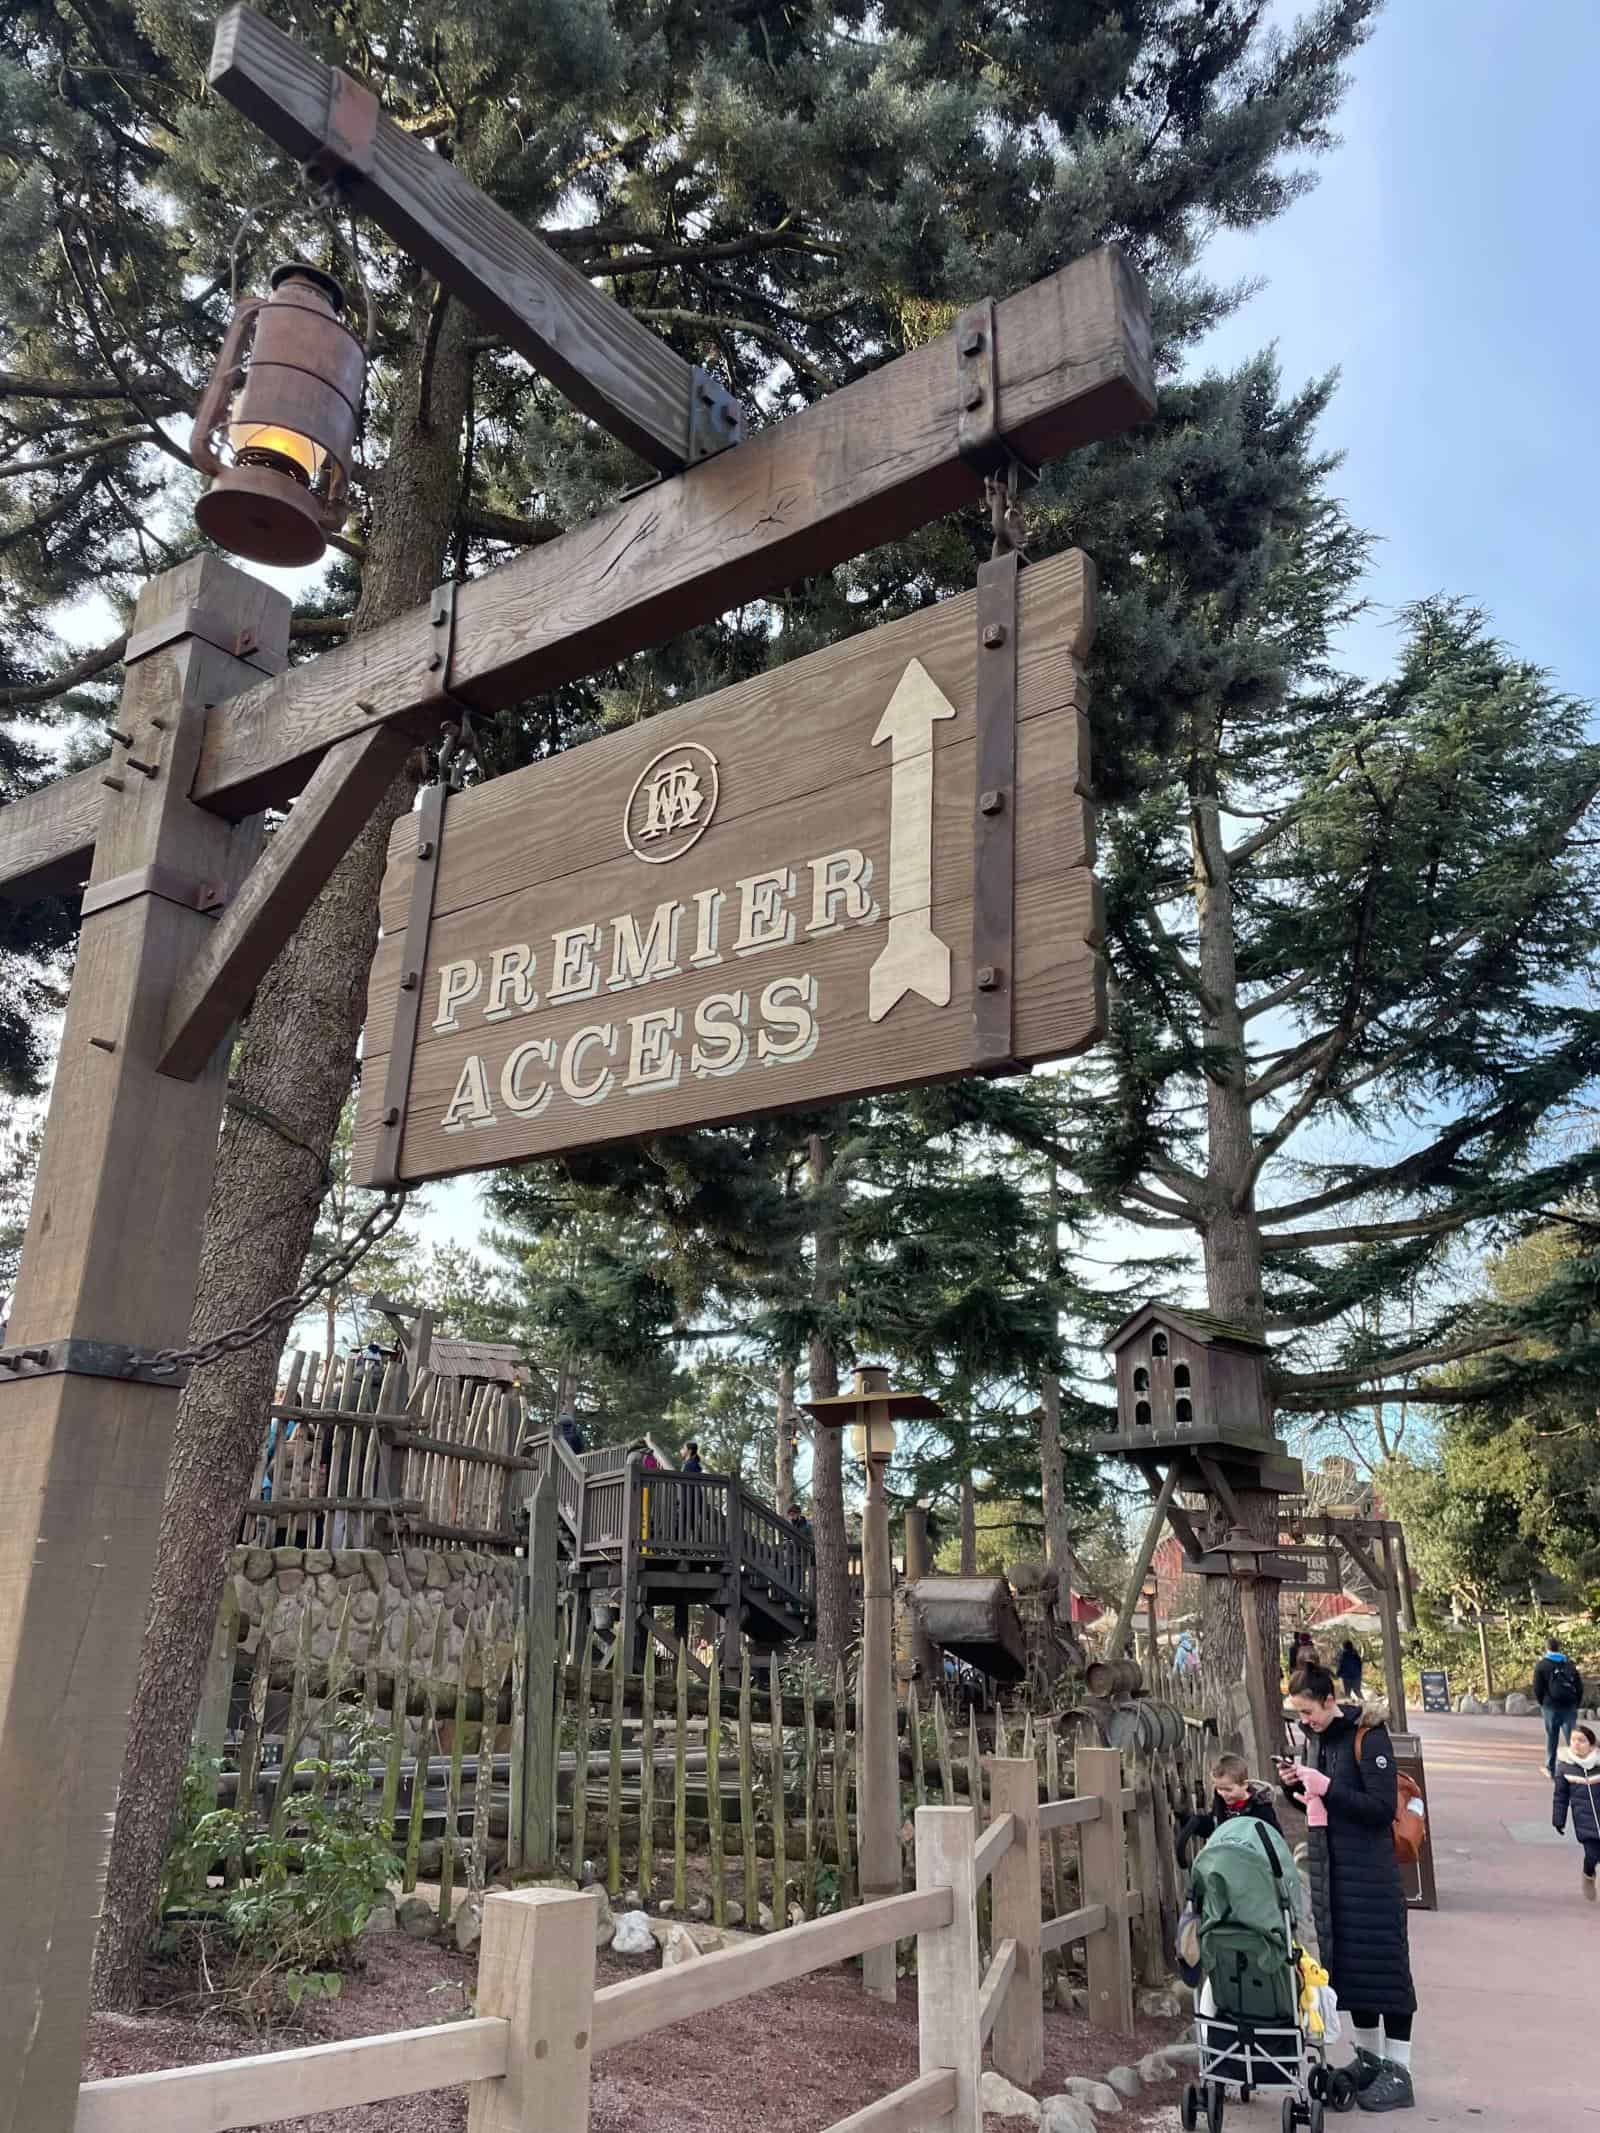 Disneyland Paris Premier Access Sign